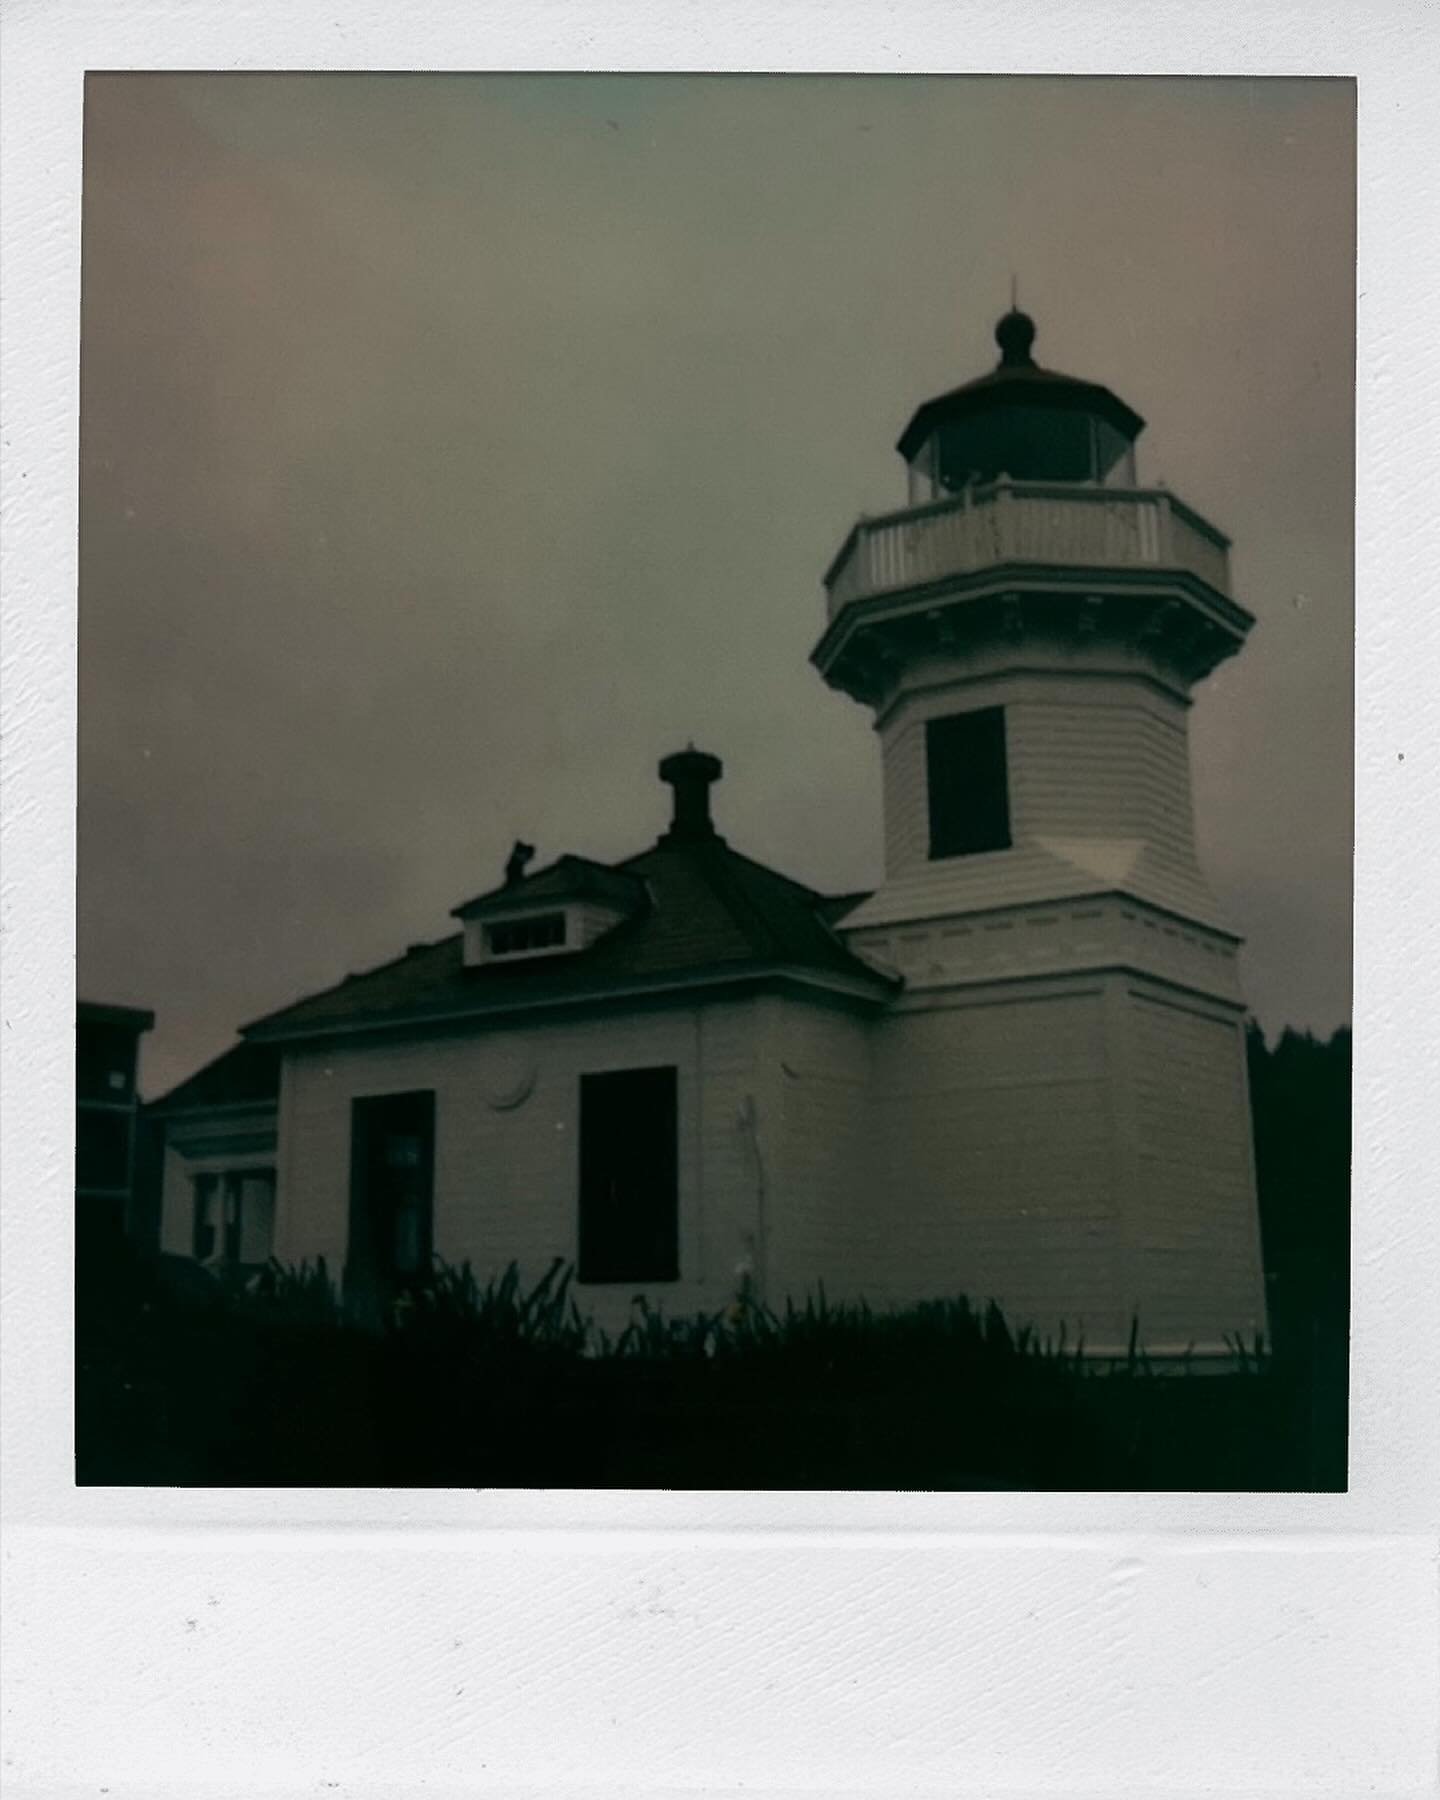 Lighthouse on #poloroid

#poloroidcamera #poloroids #film #washington #washingtonstate #pnwadventures #pnwexplored #moody #lighthouse #lighthousesofinstagram